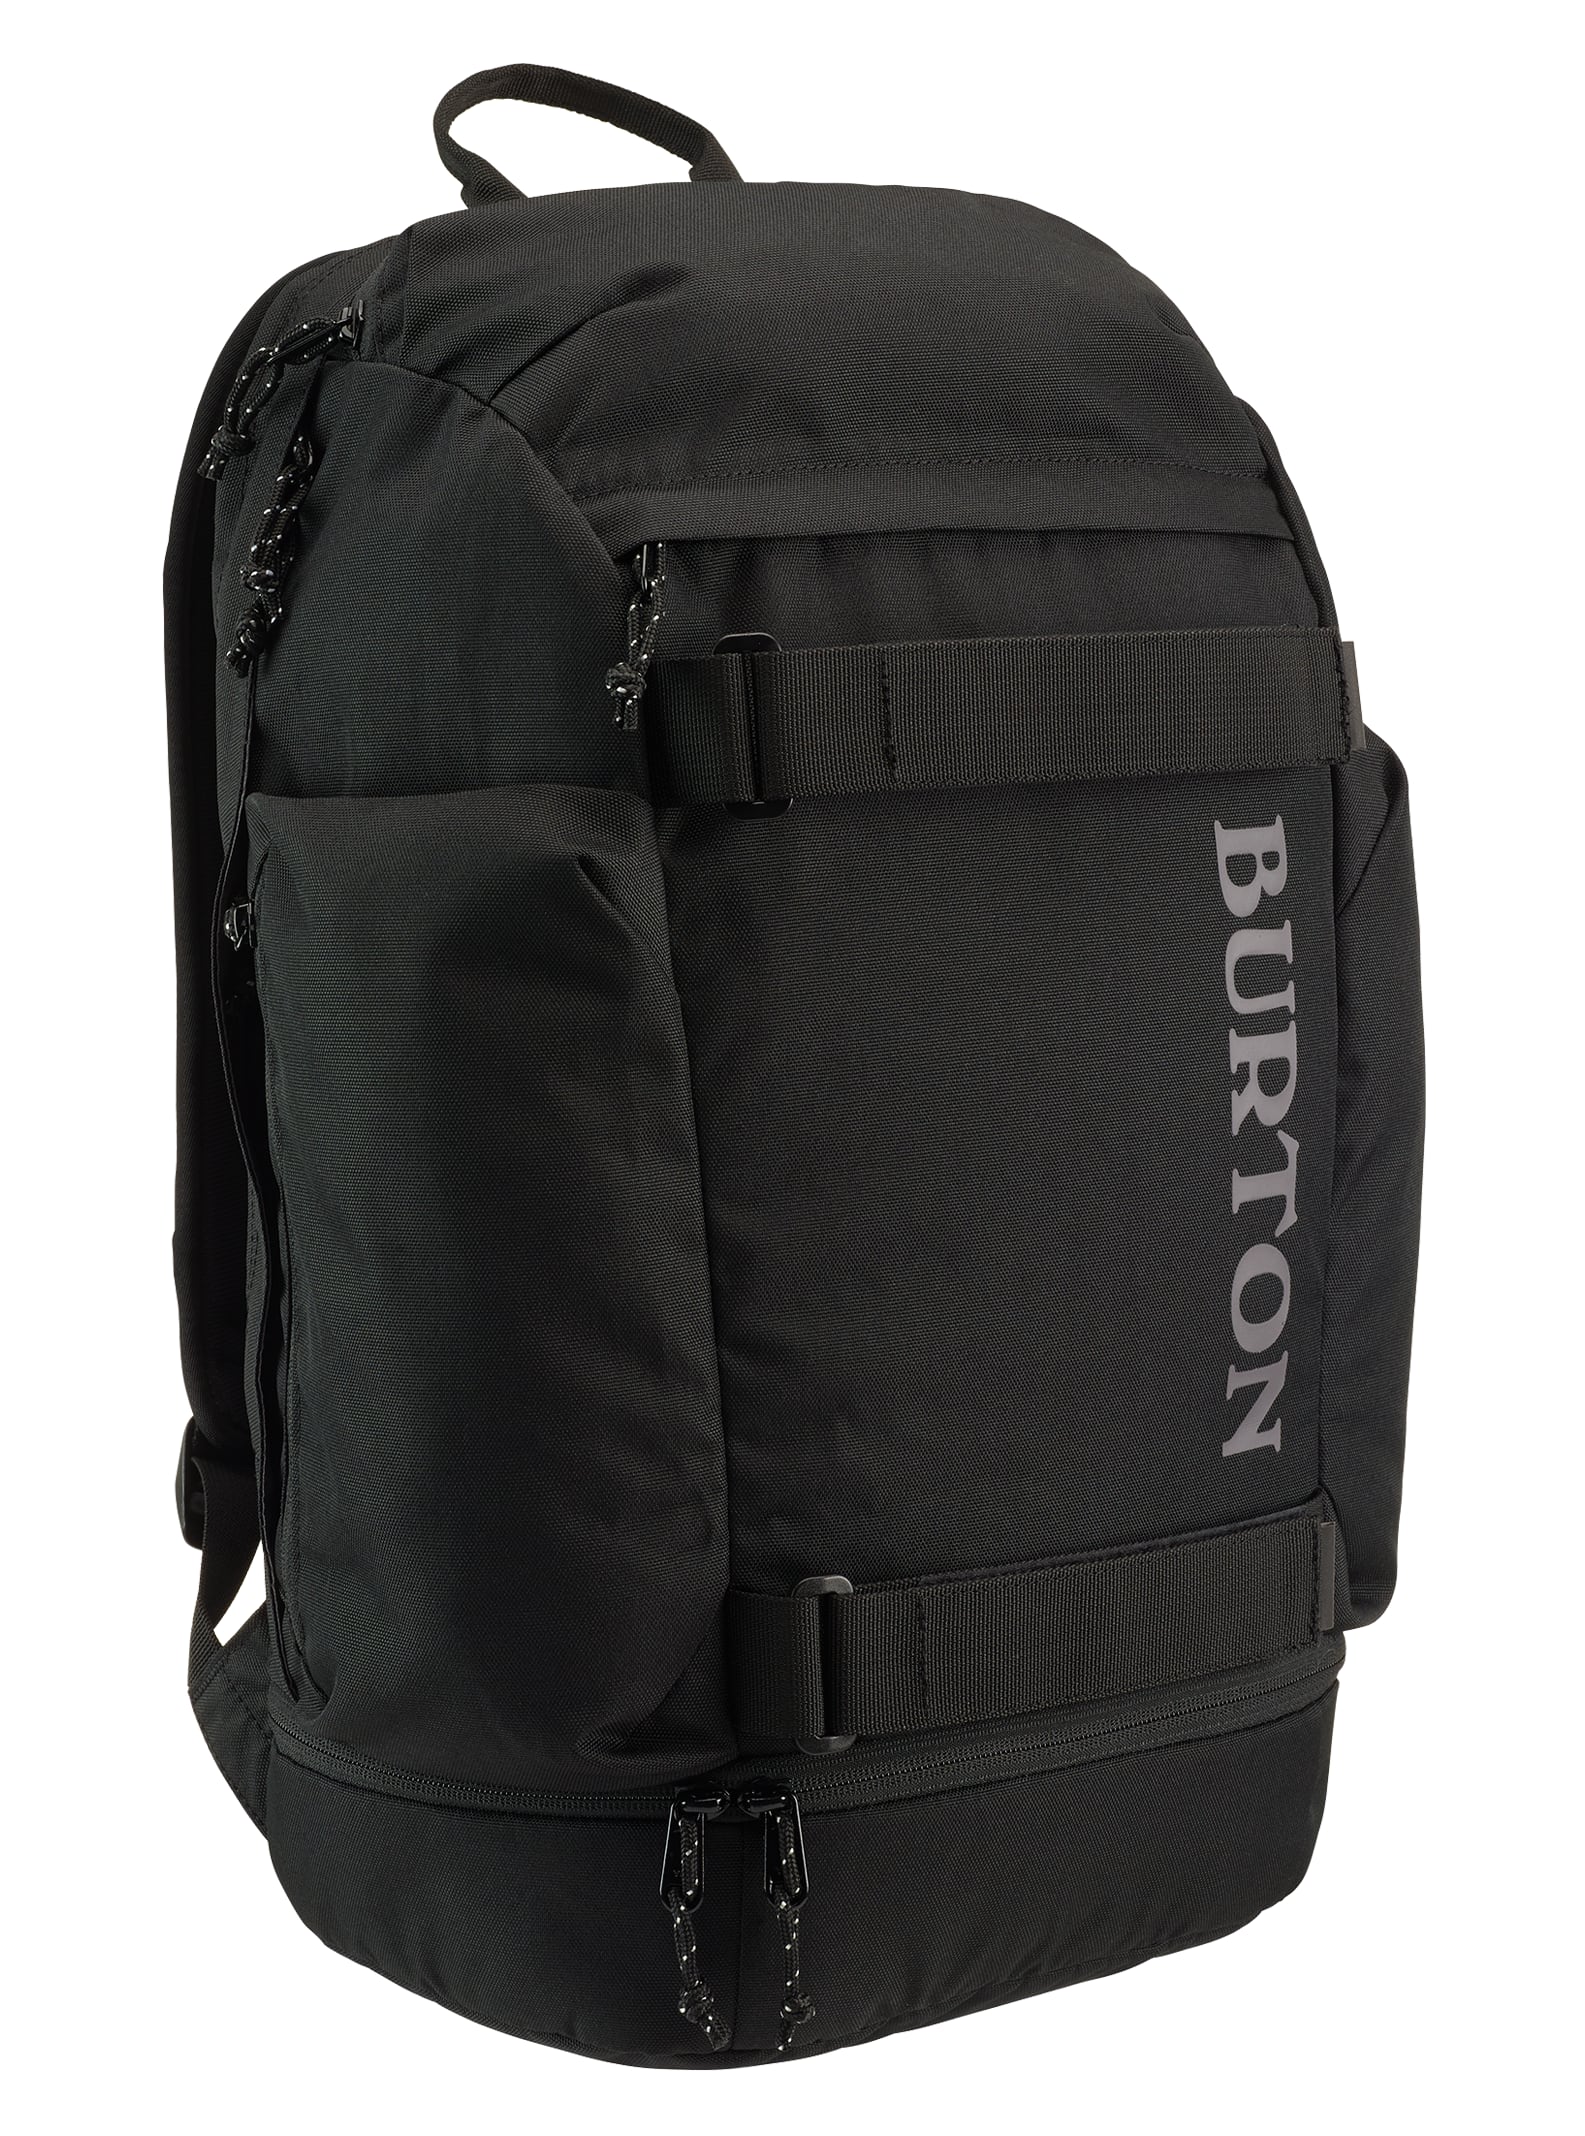 Burton Backpack Deals, 56% OFF | www.velocityusa.com